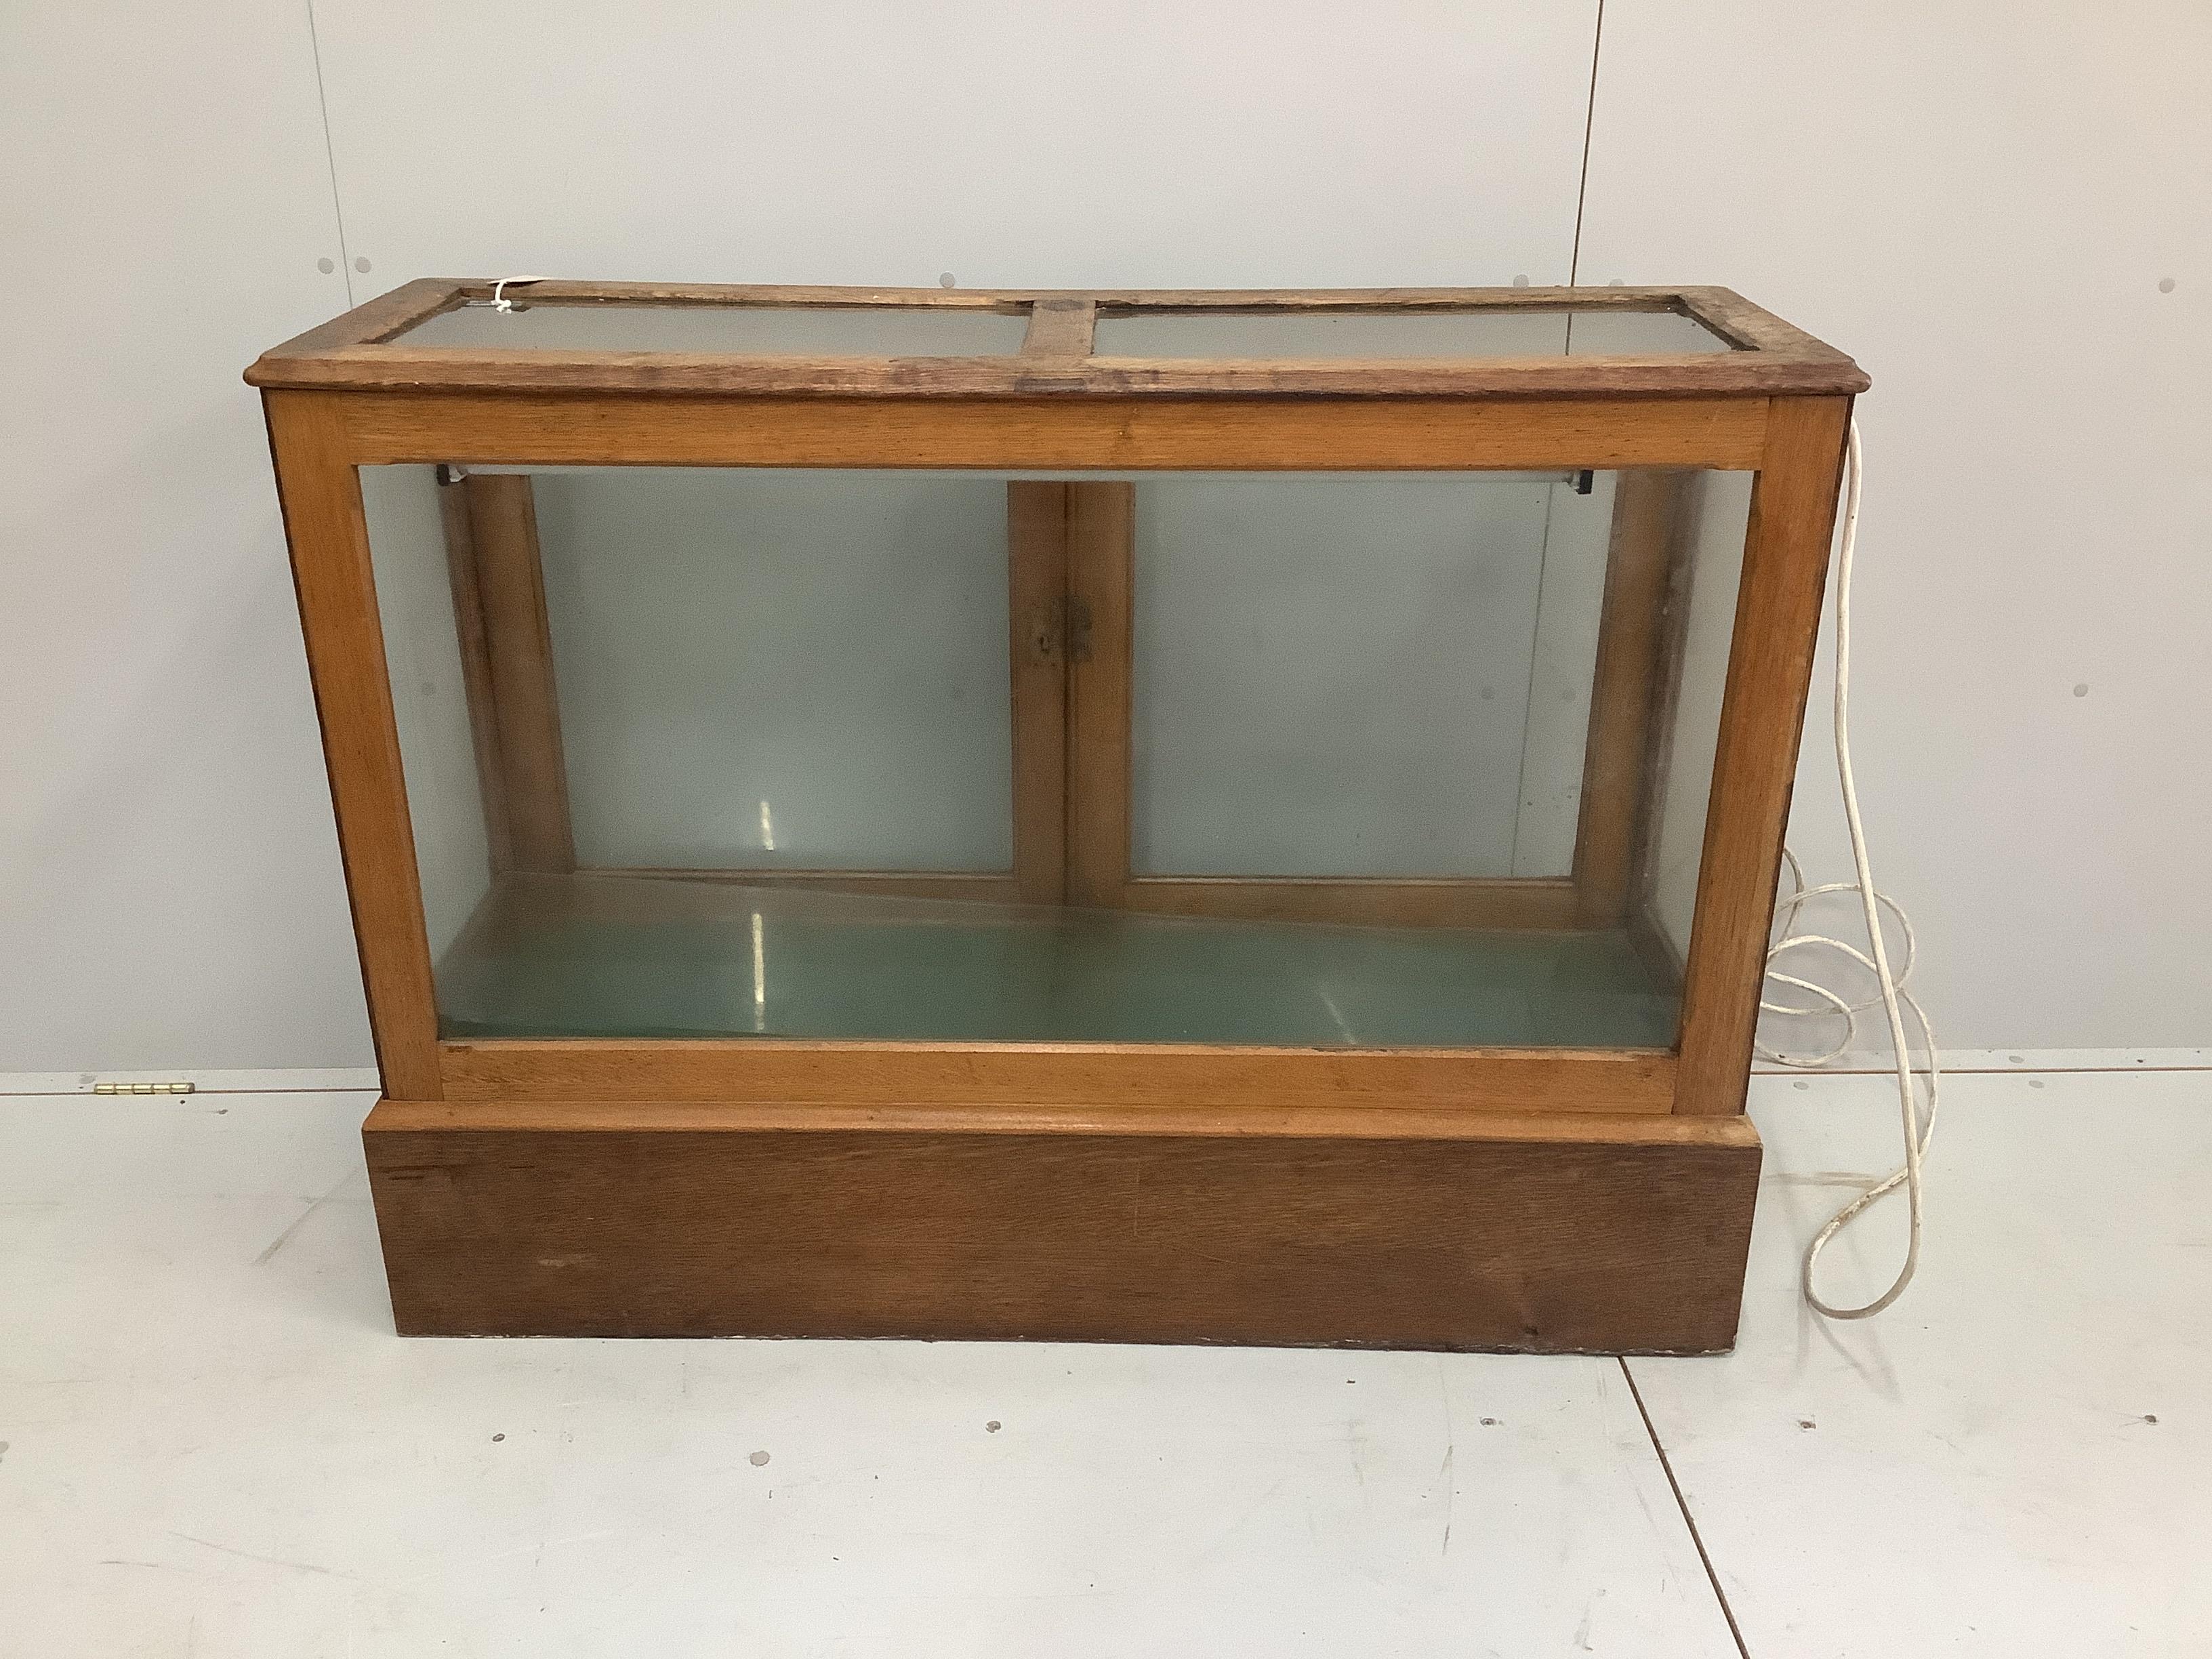 An early 20th century glazed oak shop display cabinet, width 124cm, depth 40cm, height 91cm